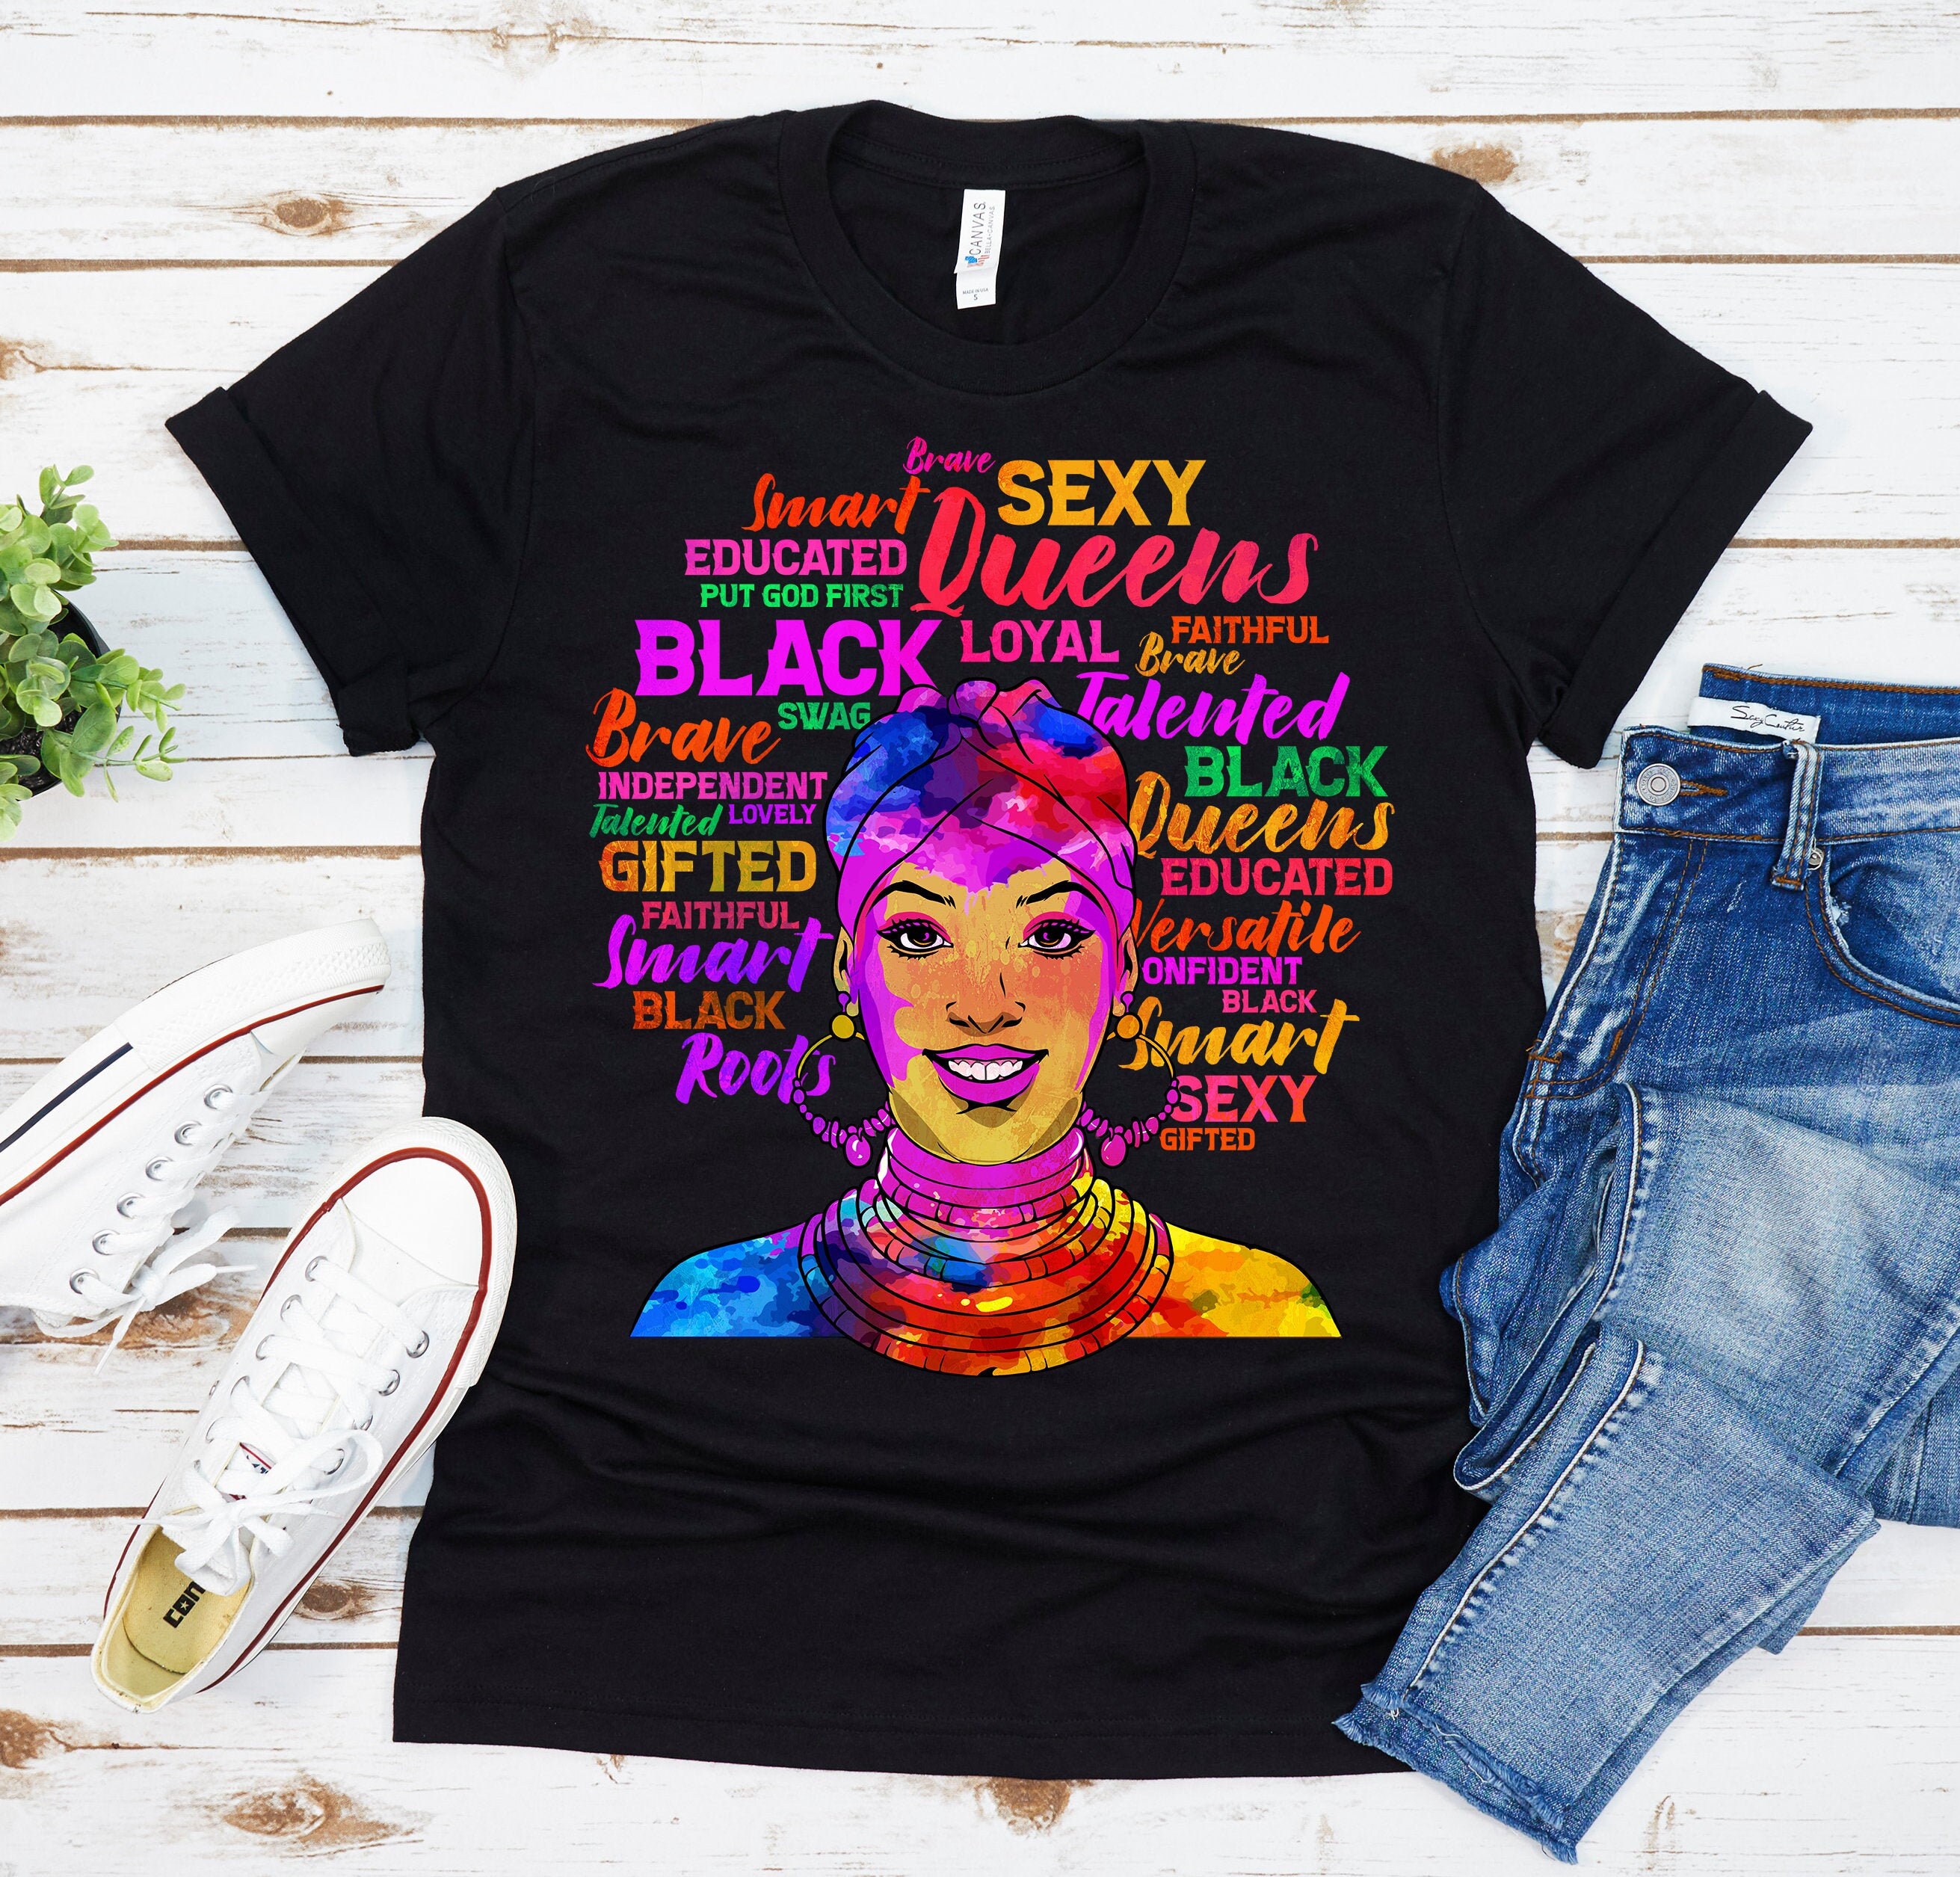 Discover Black Queen Shirt, Black History Month Shirt, African American Shirt